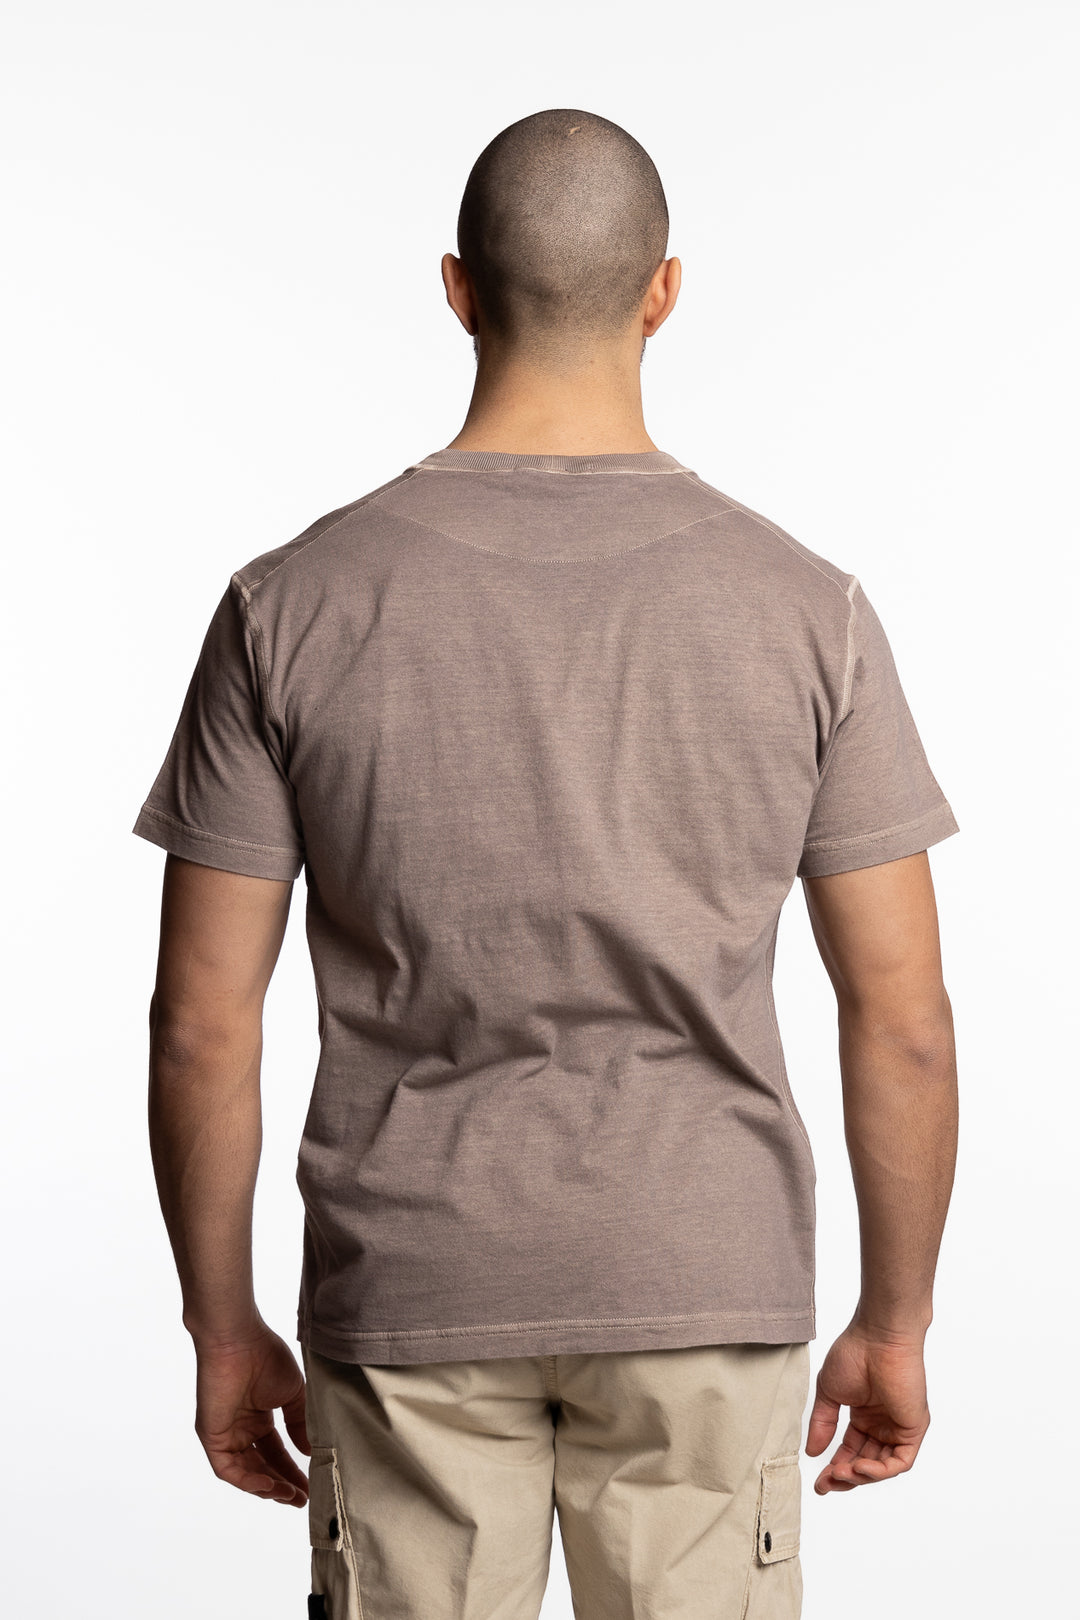 T-Shirt 'OLD' Effect Light Brown